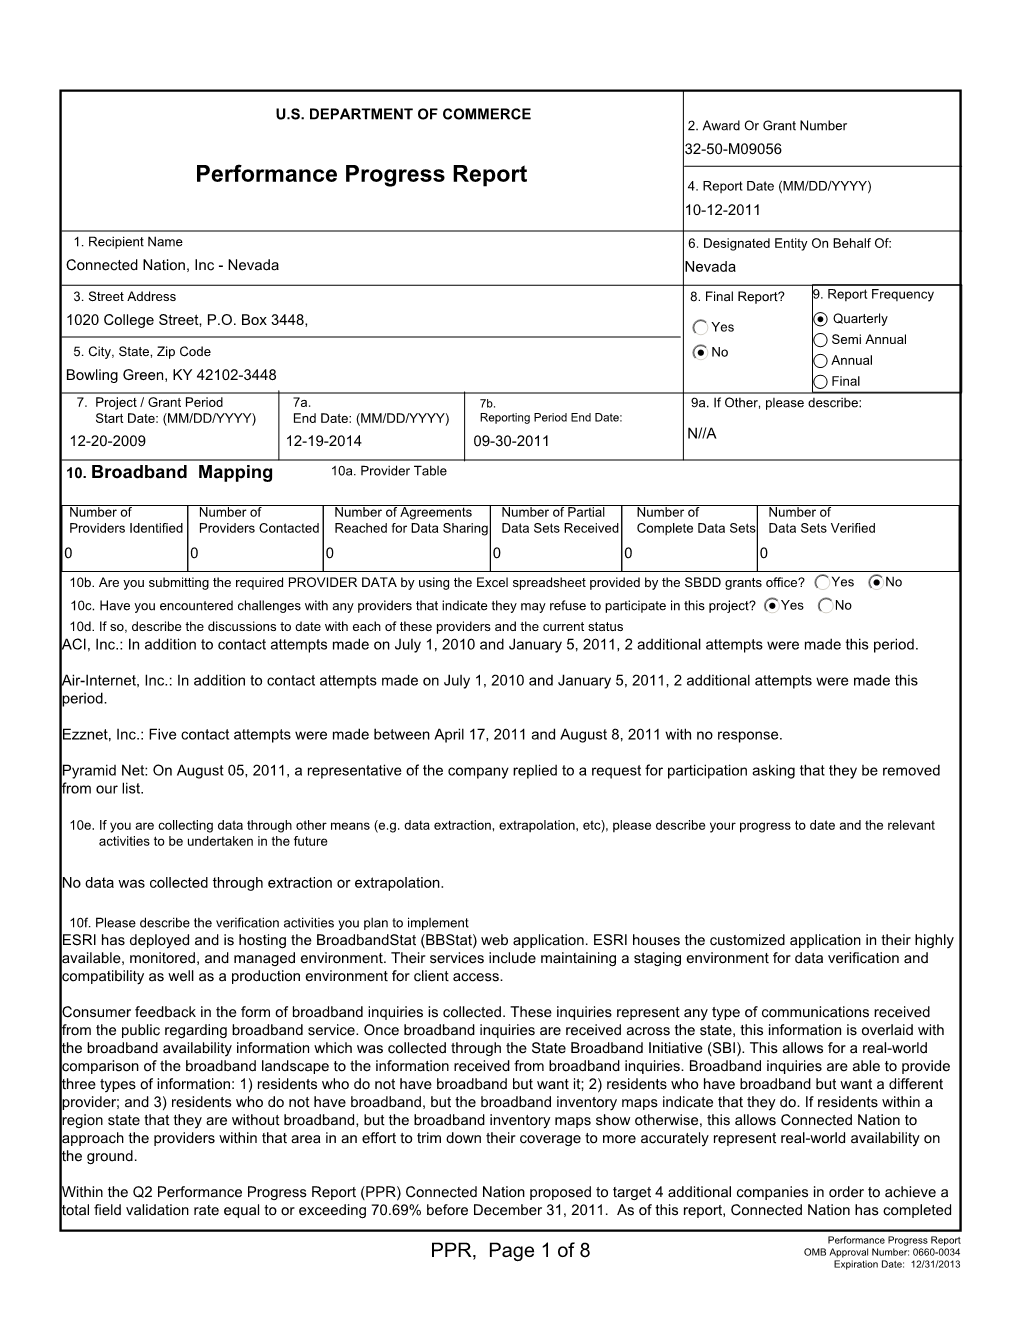 Performance Progress Report 4